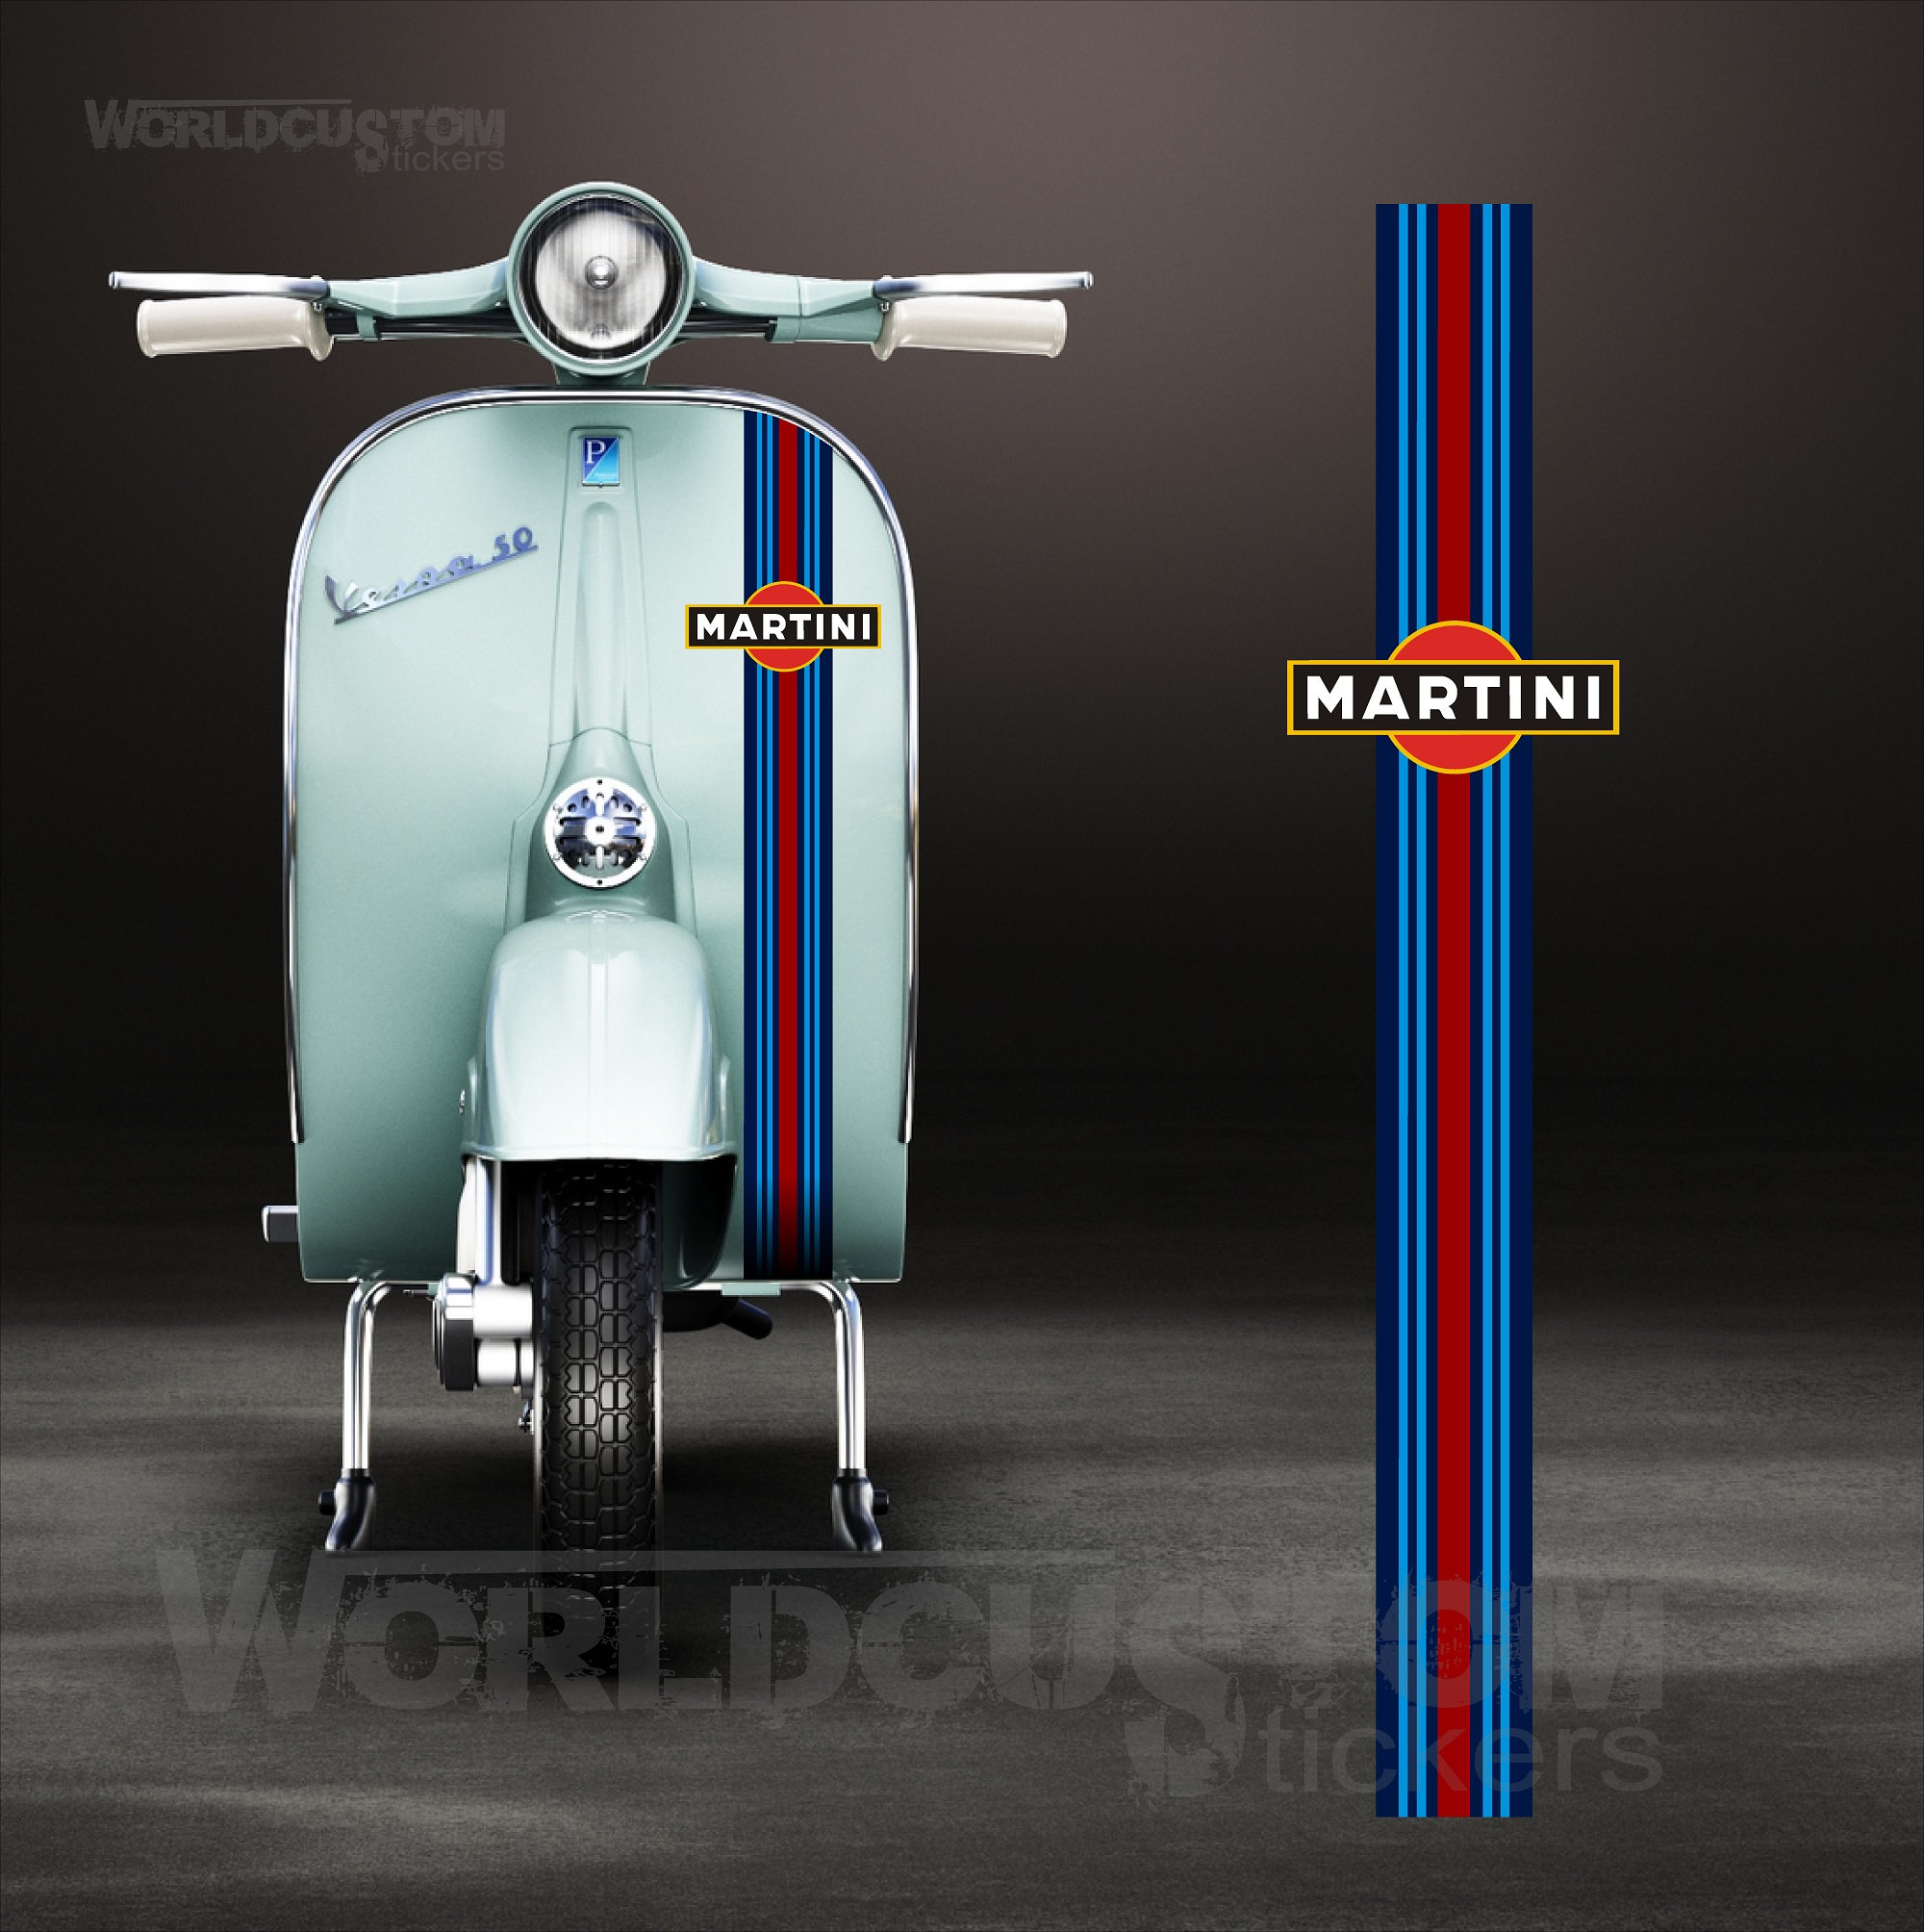 Stickers Stickers Adhesive band for motorcycles Piaggio Vespa 50 125 150  200 Martini